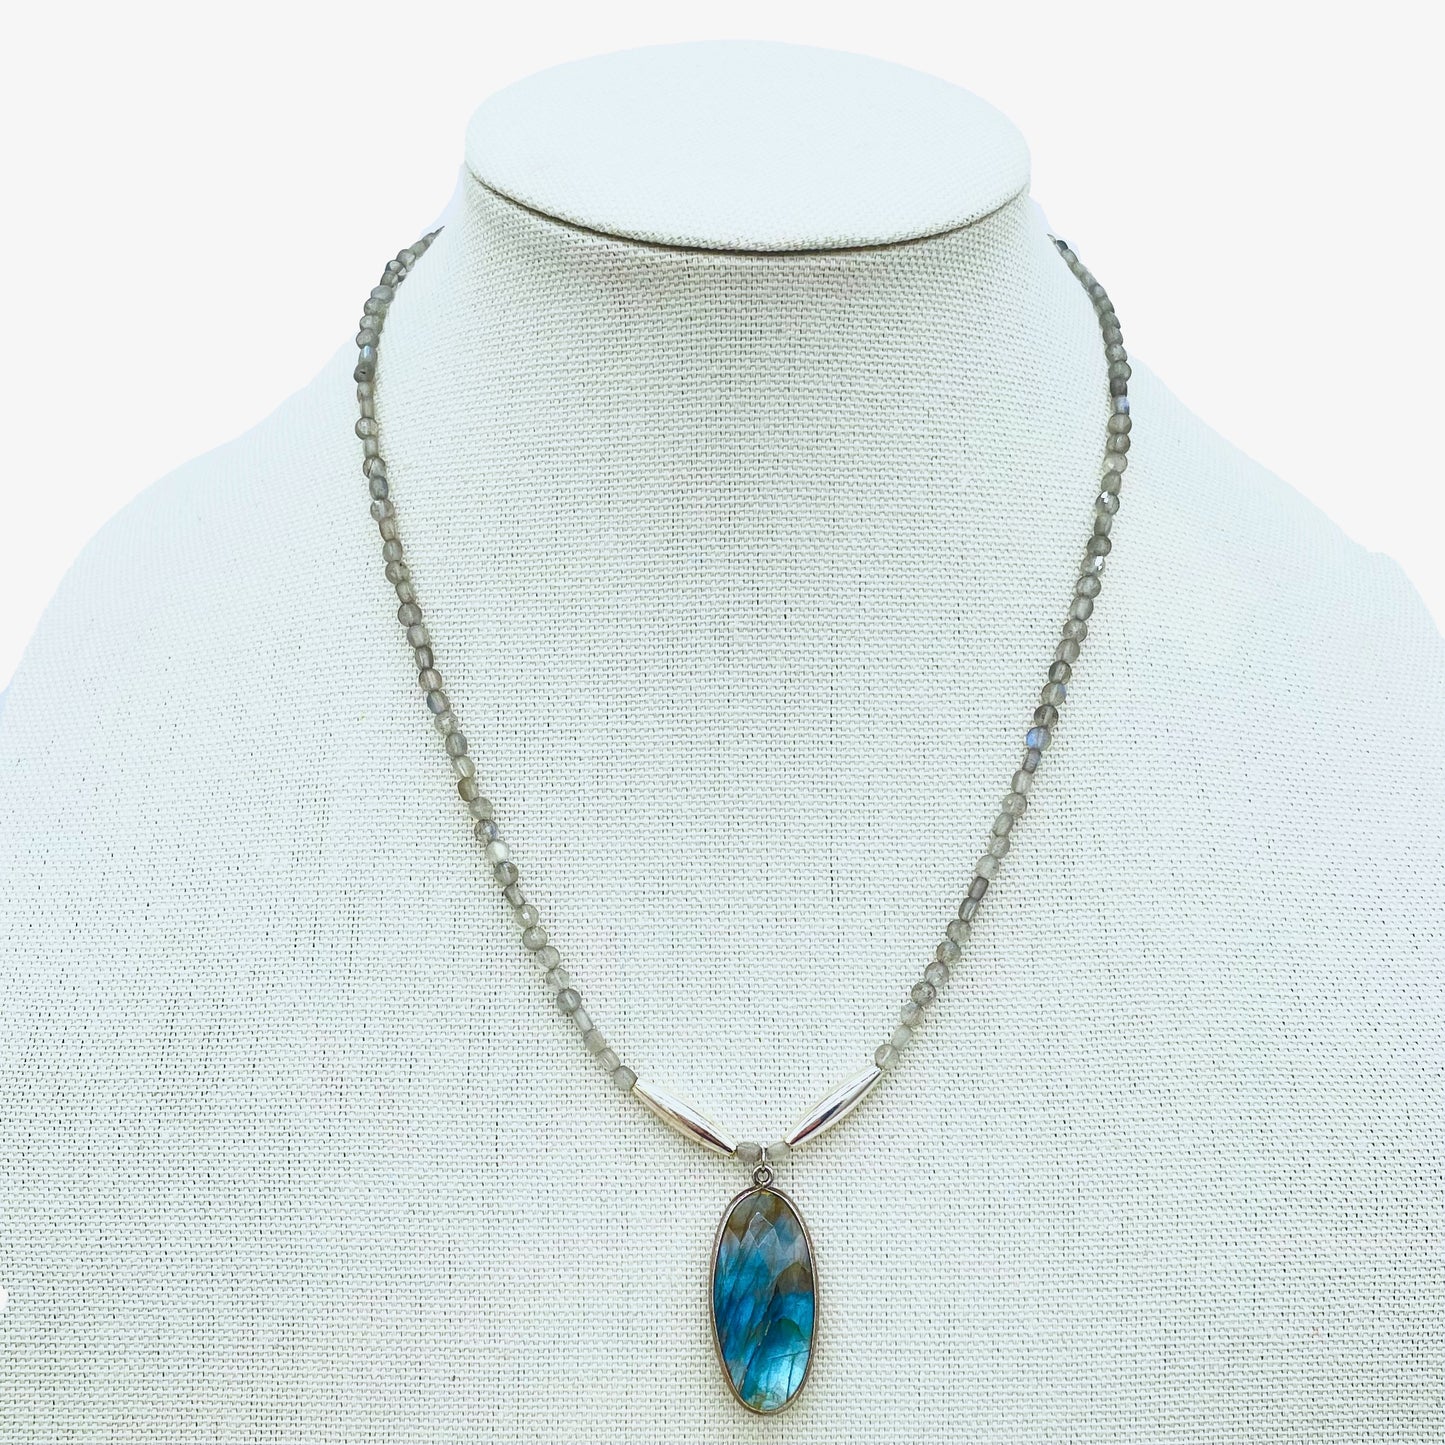 Labradorite and silver pendant necklace